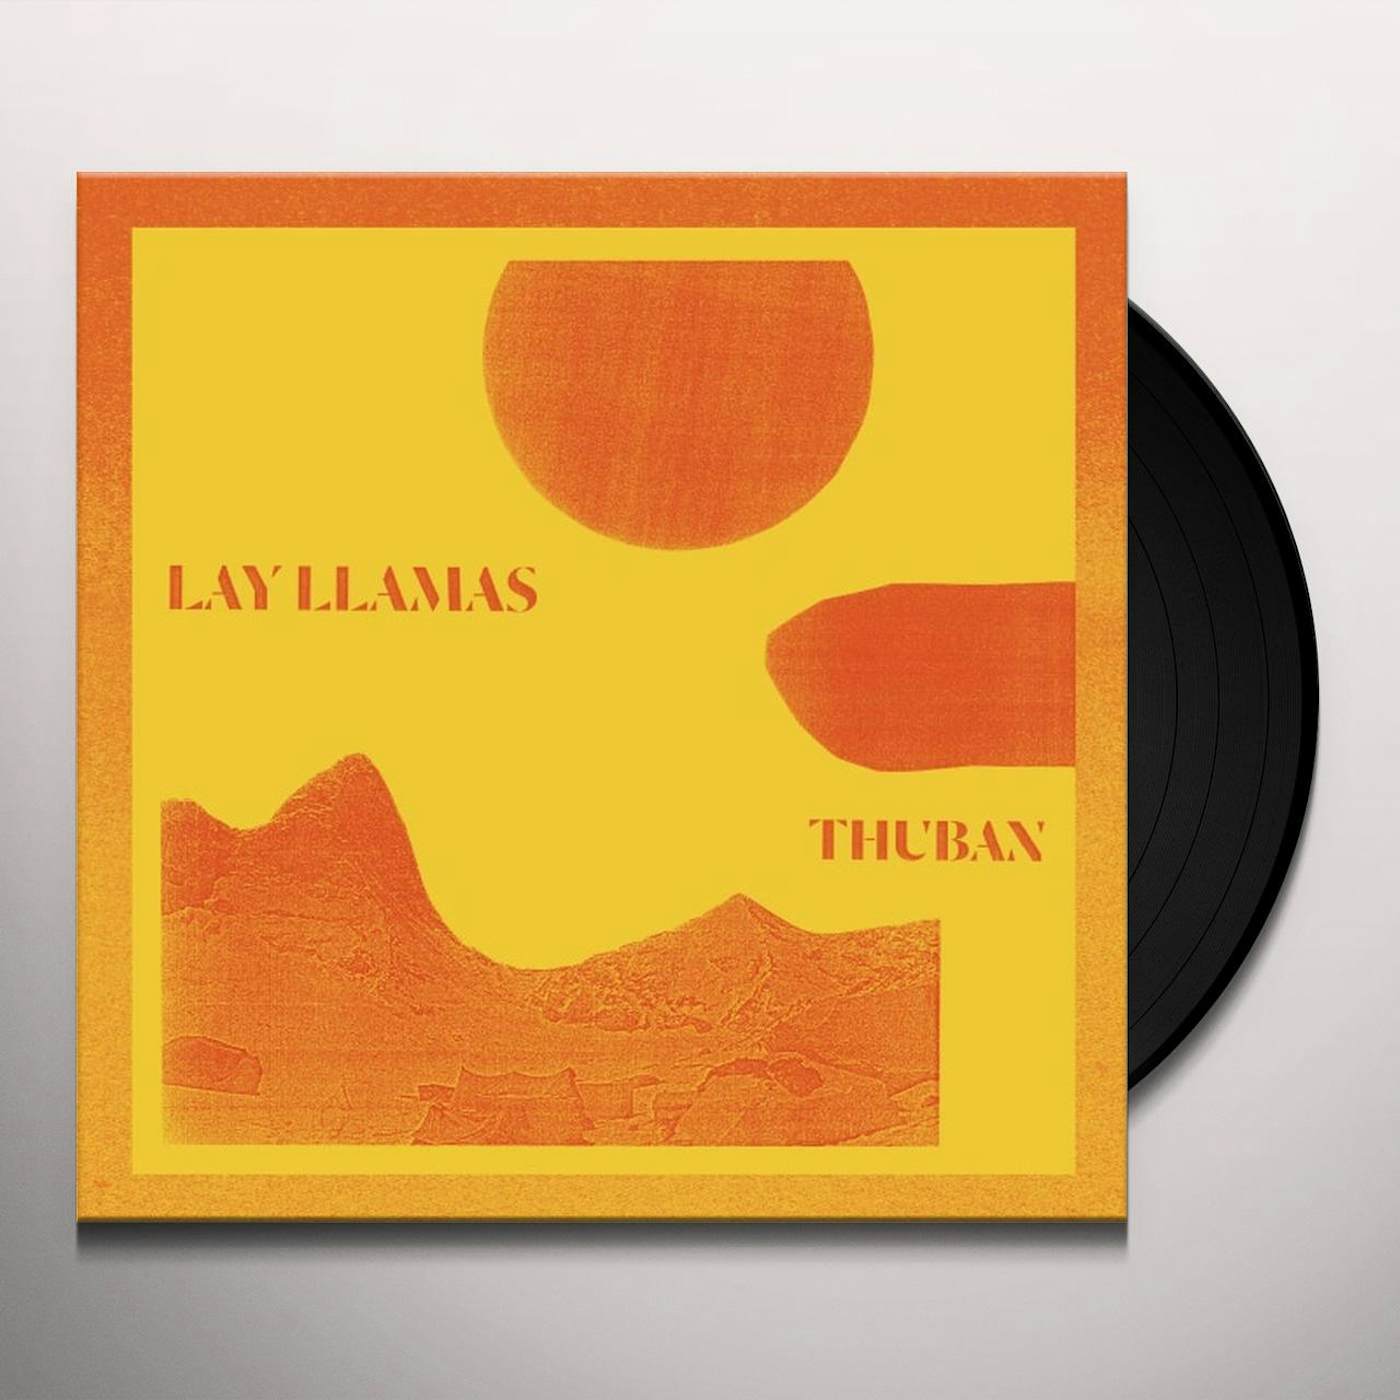 The Lay Llamas Thuban Vinyl Record